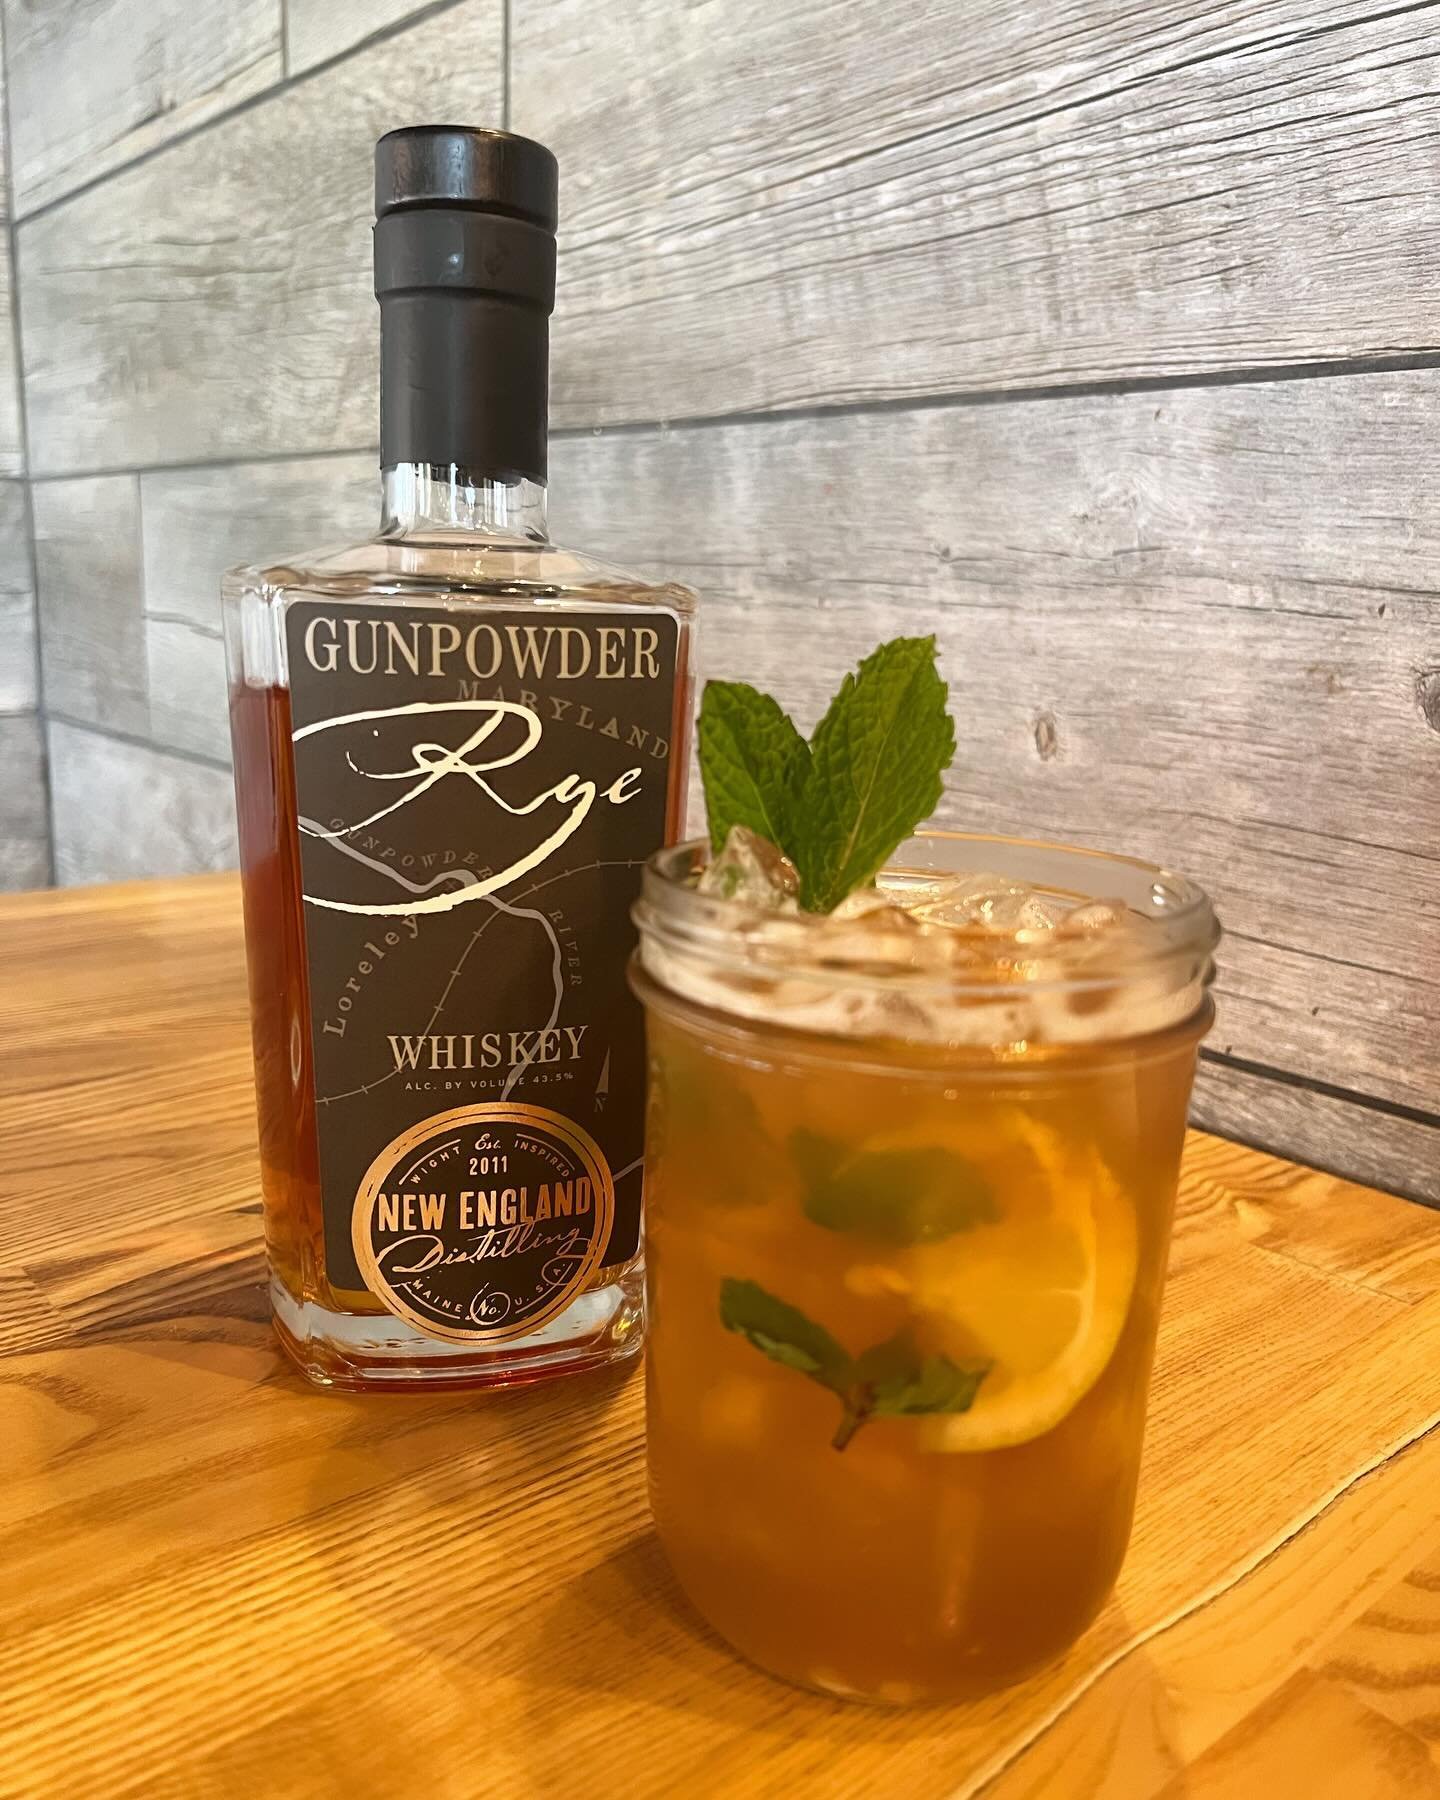 Drink L O C A L 📍 with our Gunpowder Smash cocktail 🥃
@nedistilling Gunpowder rye whiskey, peach liqueur, lemon, fresh mint, shaken with black iced tea